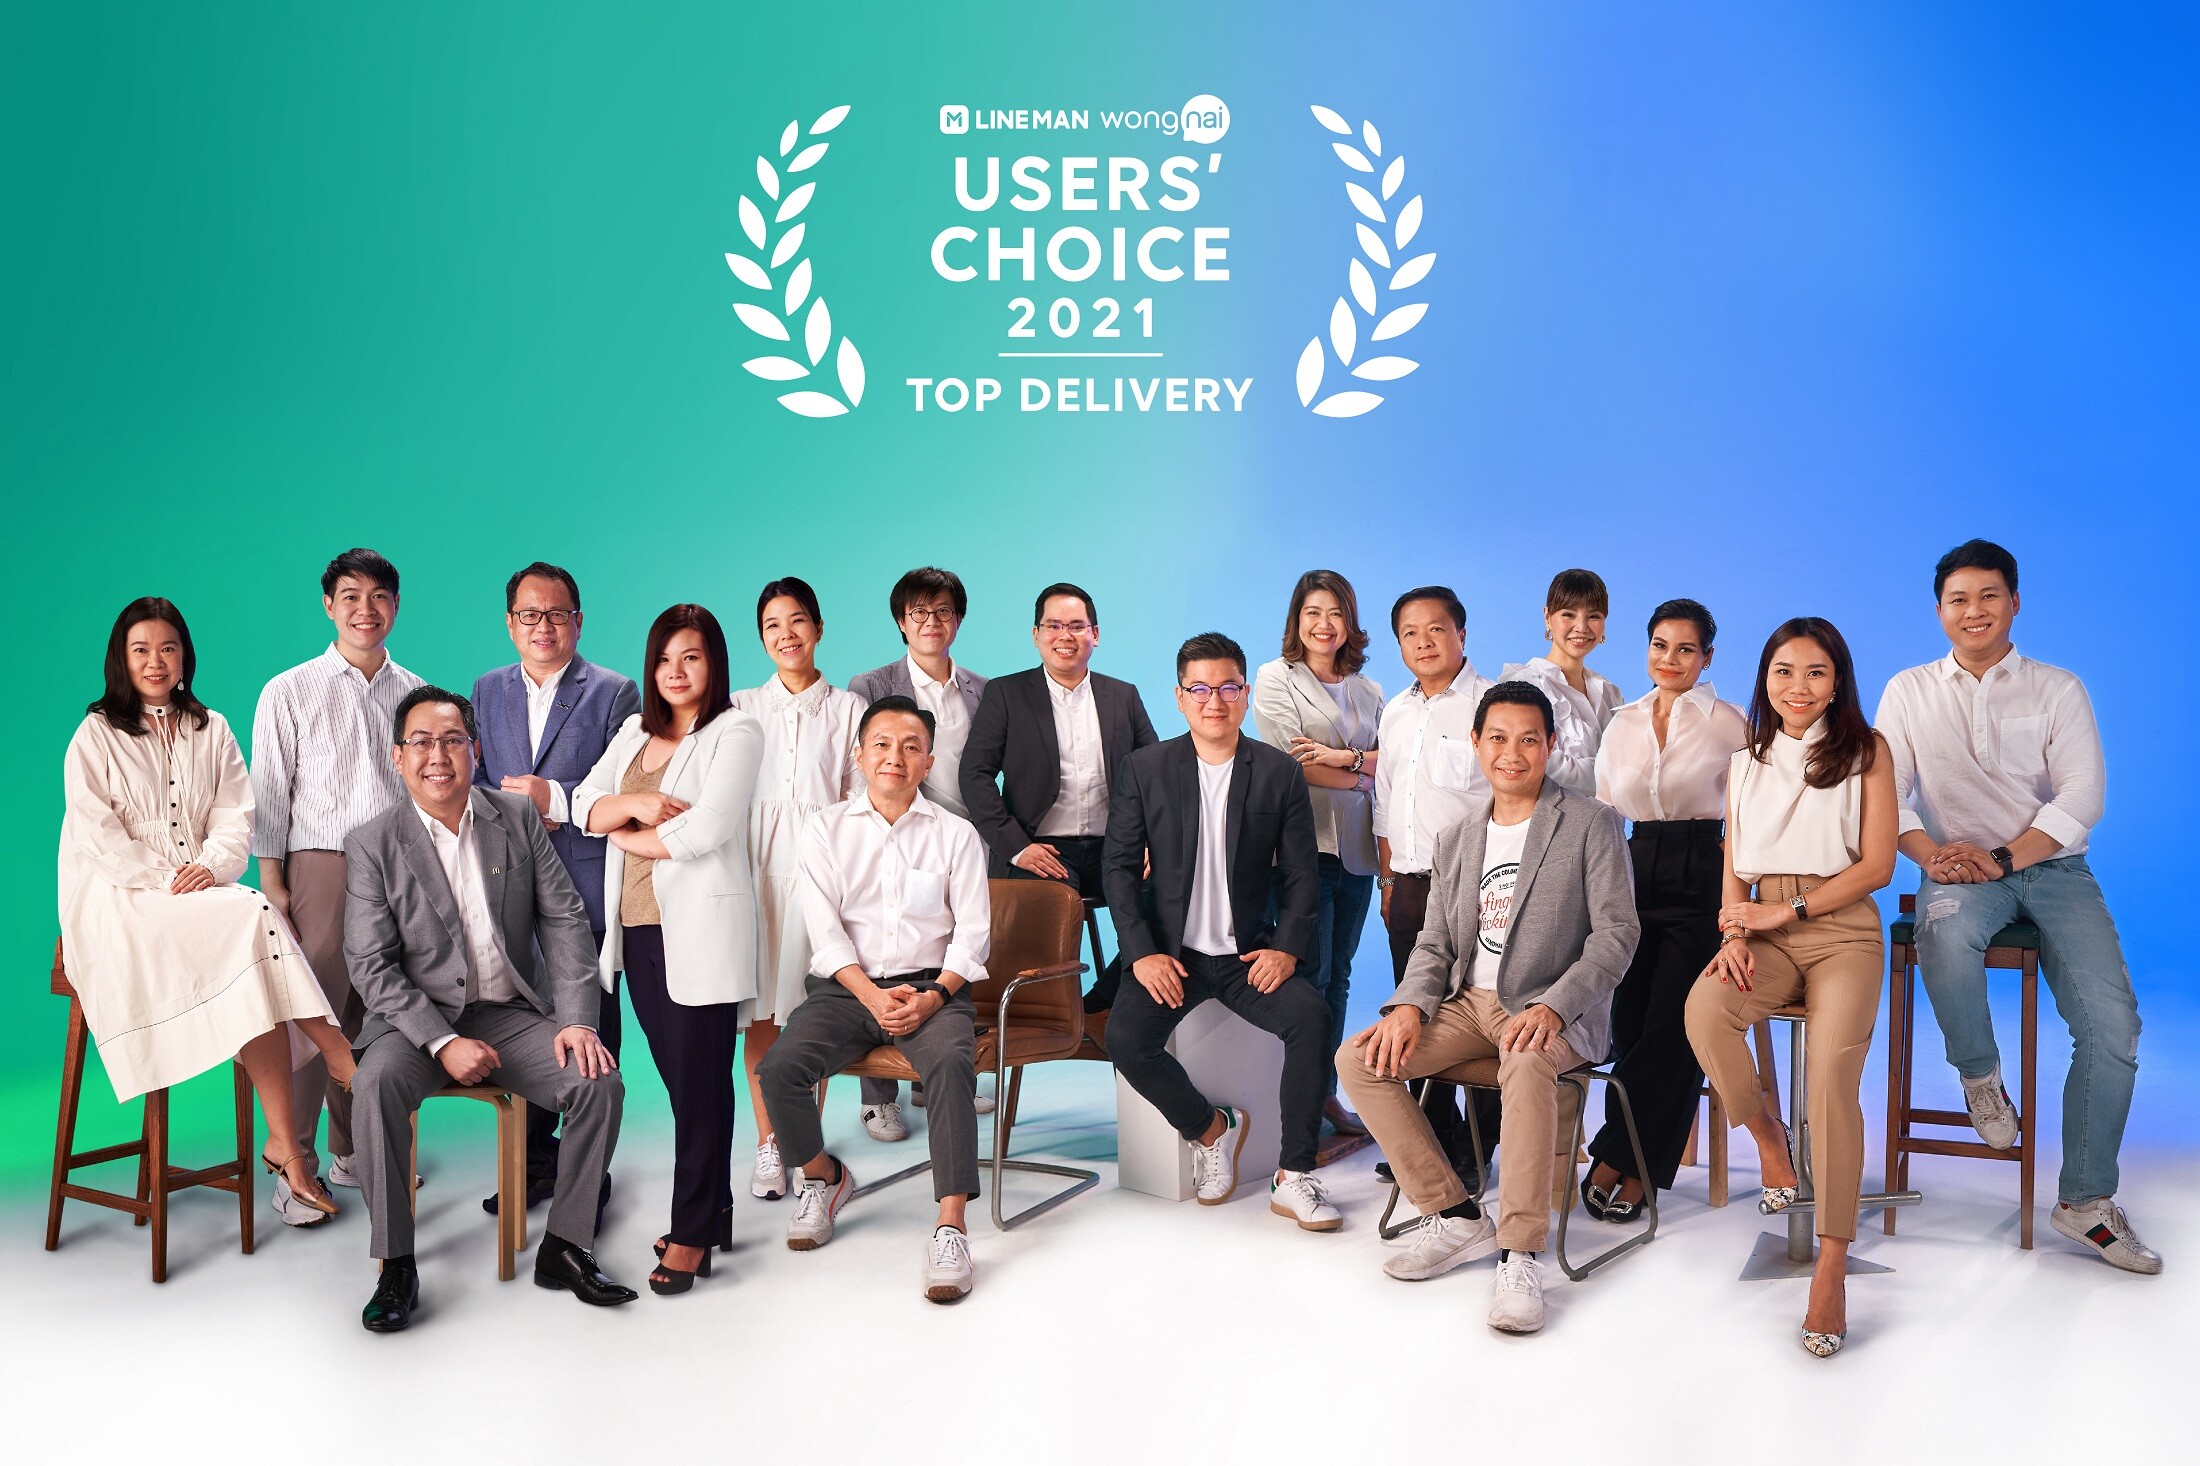 Cafe Amazon รับรางวัลสุดยอดร้านกาแฟเดลิเวอรีขายดี จาก "LINE MAN Wongnai Users' Choice 2021"